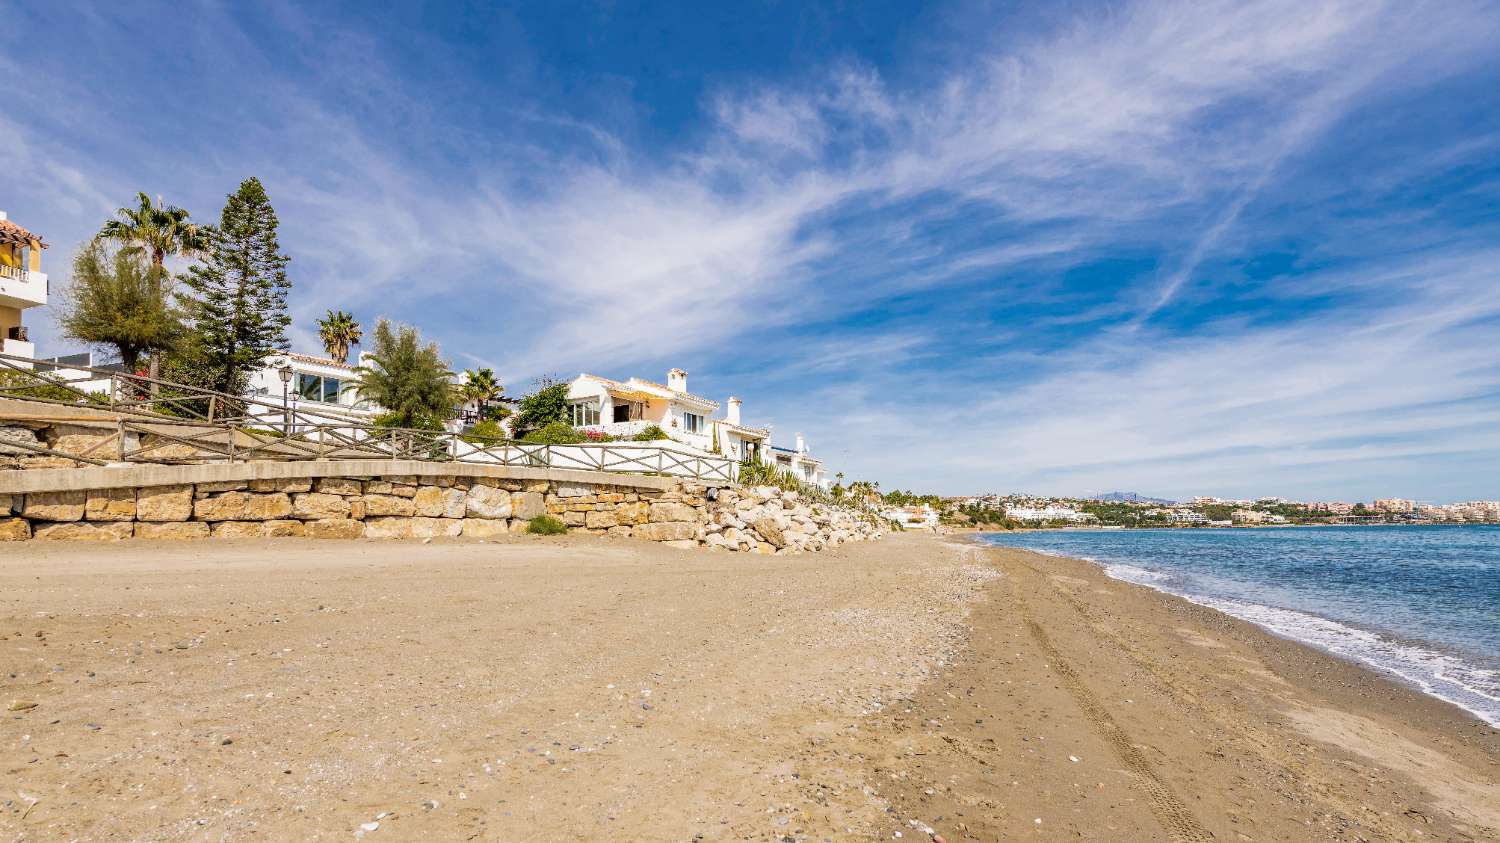 Vakker renovert villa med havutsikt ved siden av stranden i Estepona